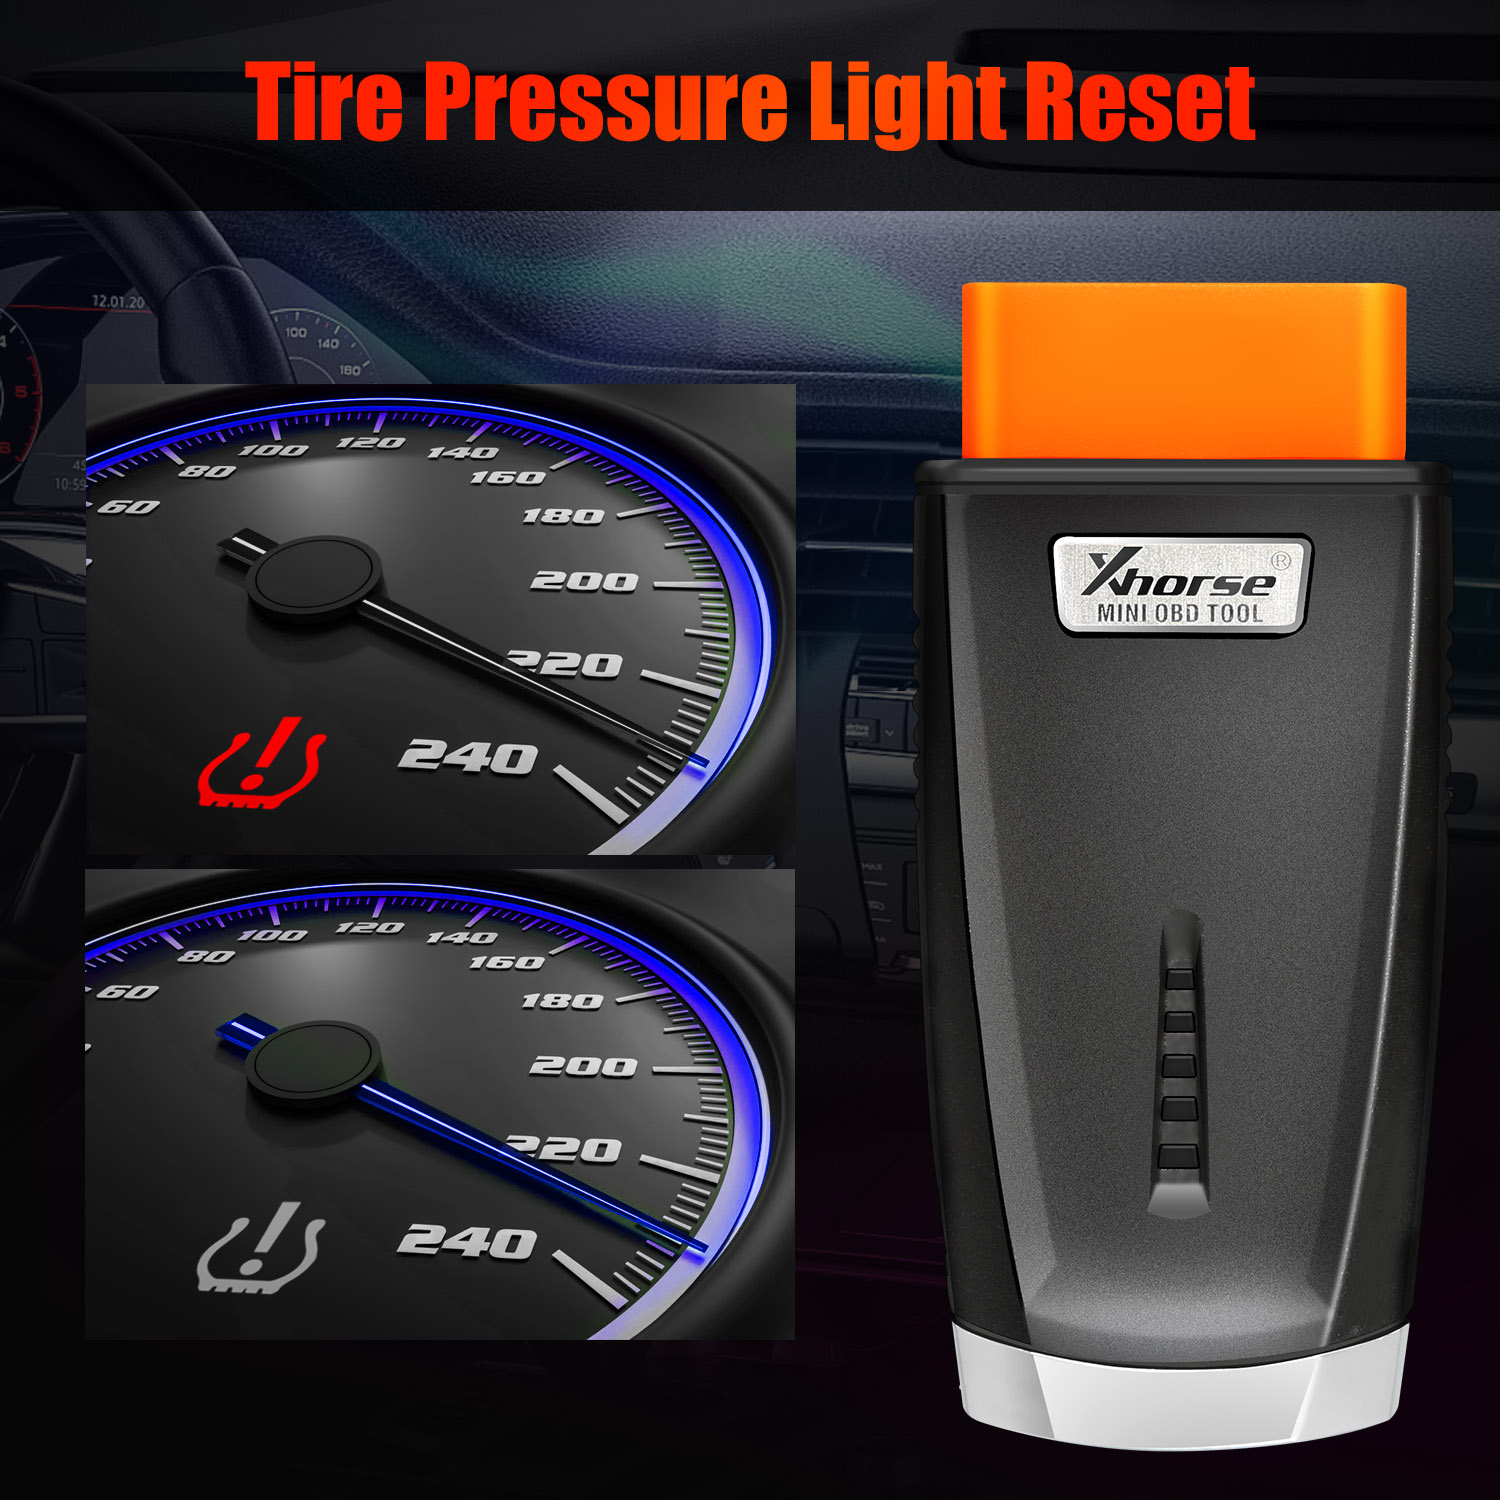 xhorse-mini-obd-tool-tire-pressure-light-reset